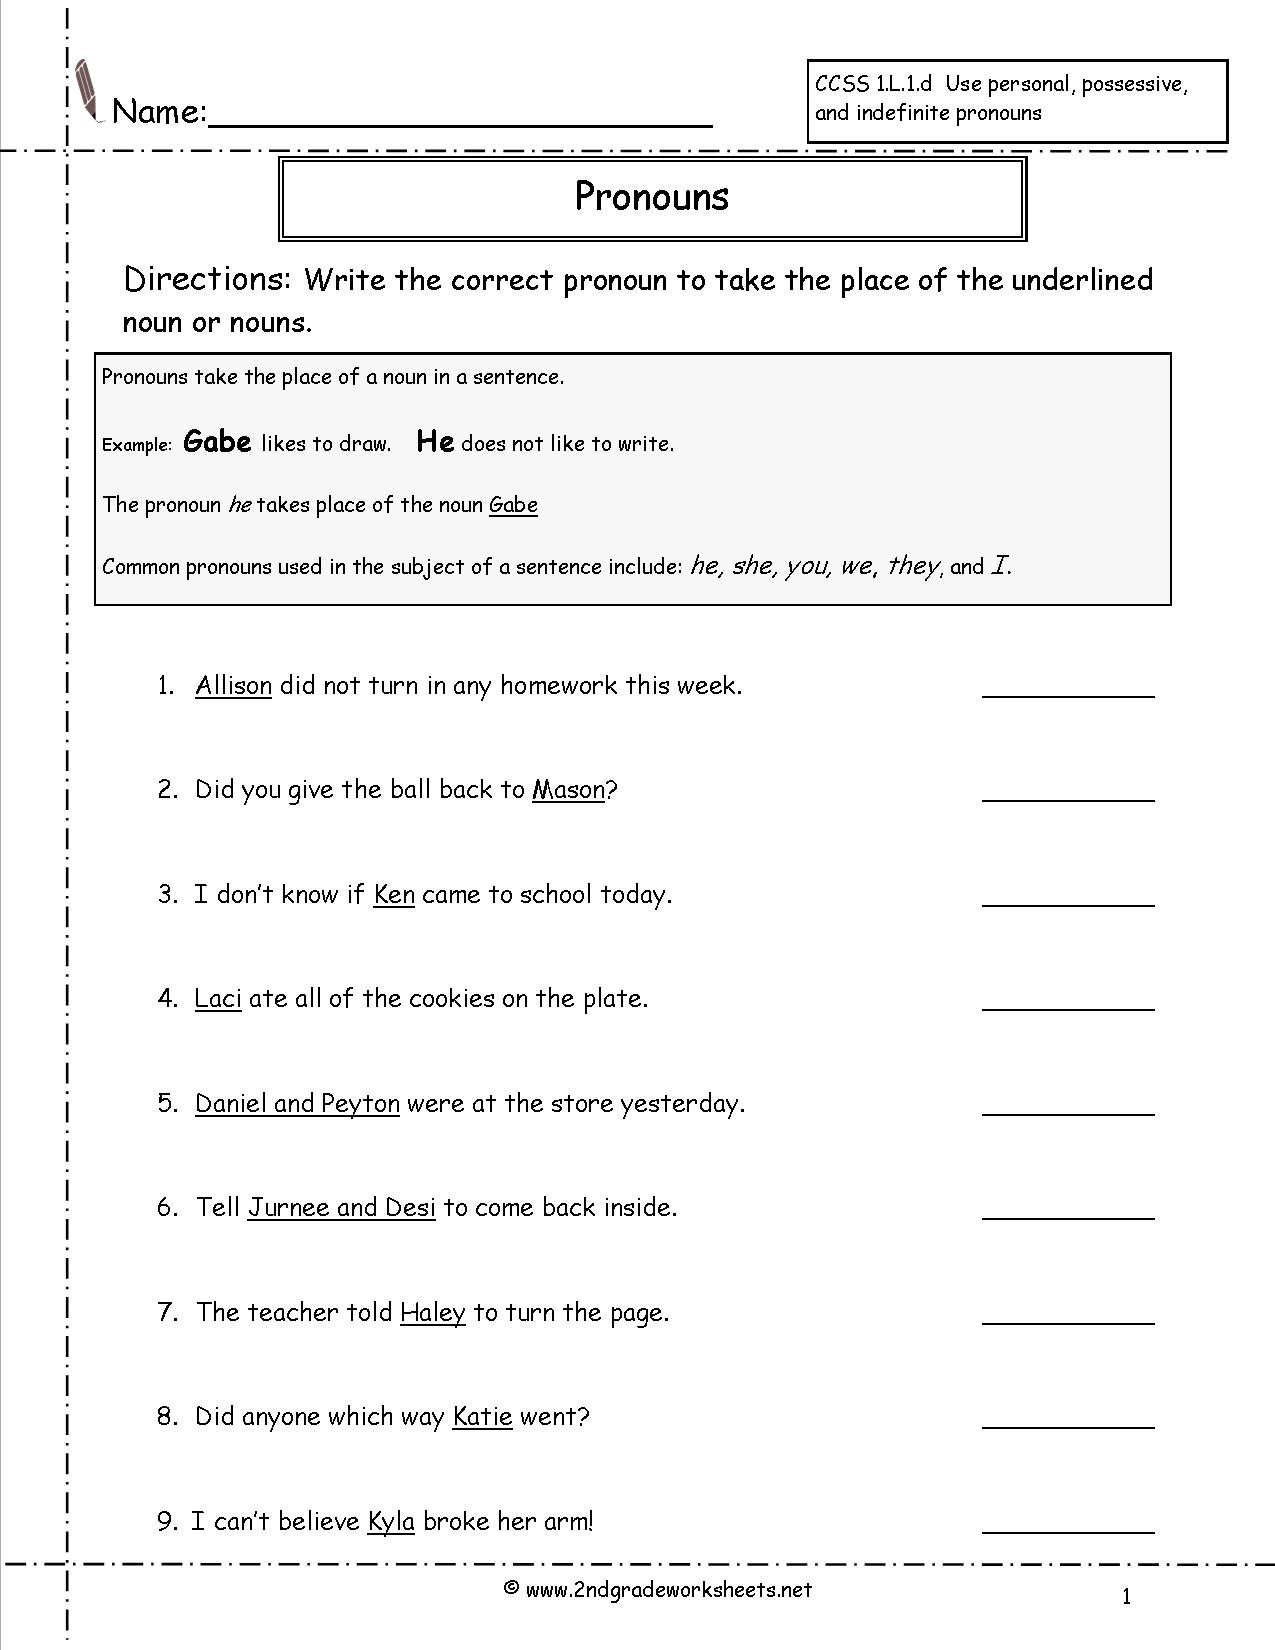 Pronoun Worksheets 2nd Grade Pronoun Worksheets 2nd Grade